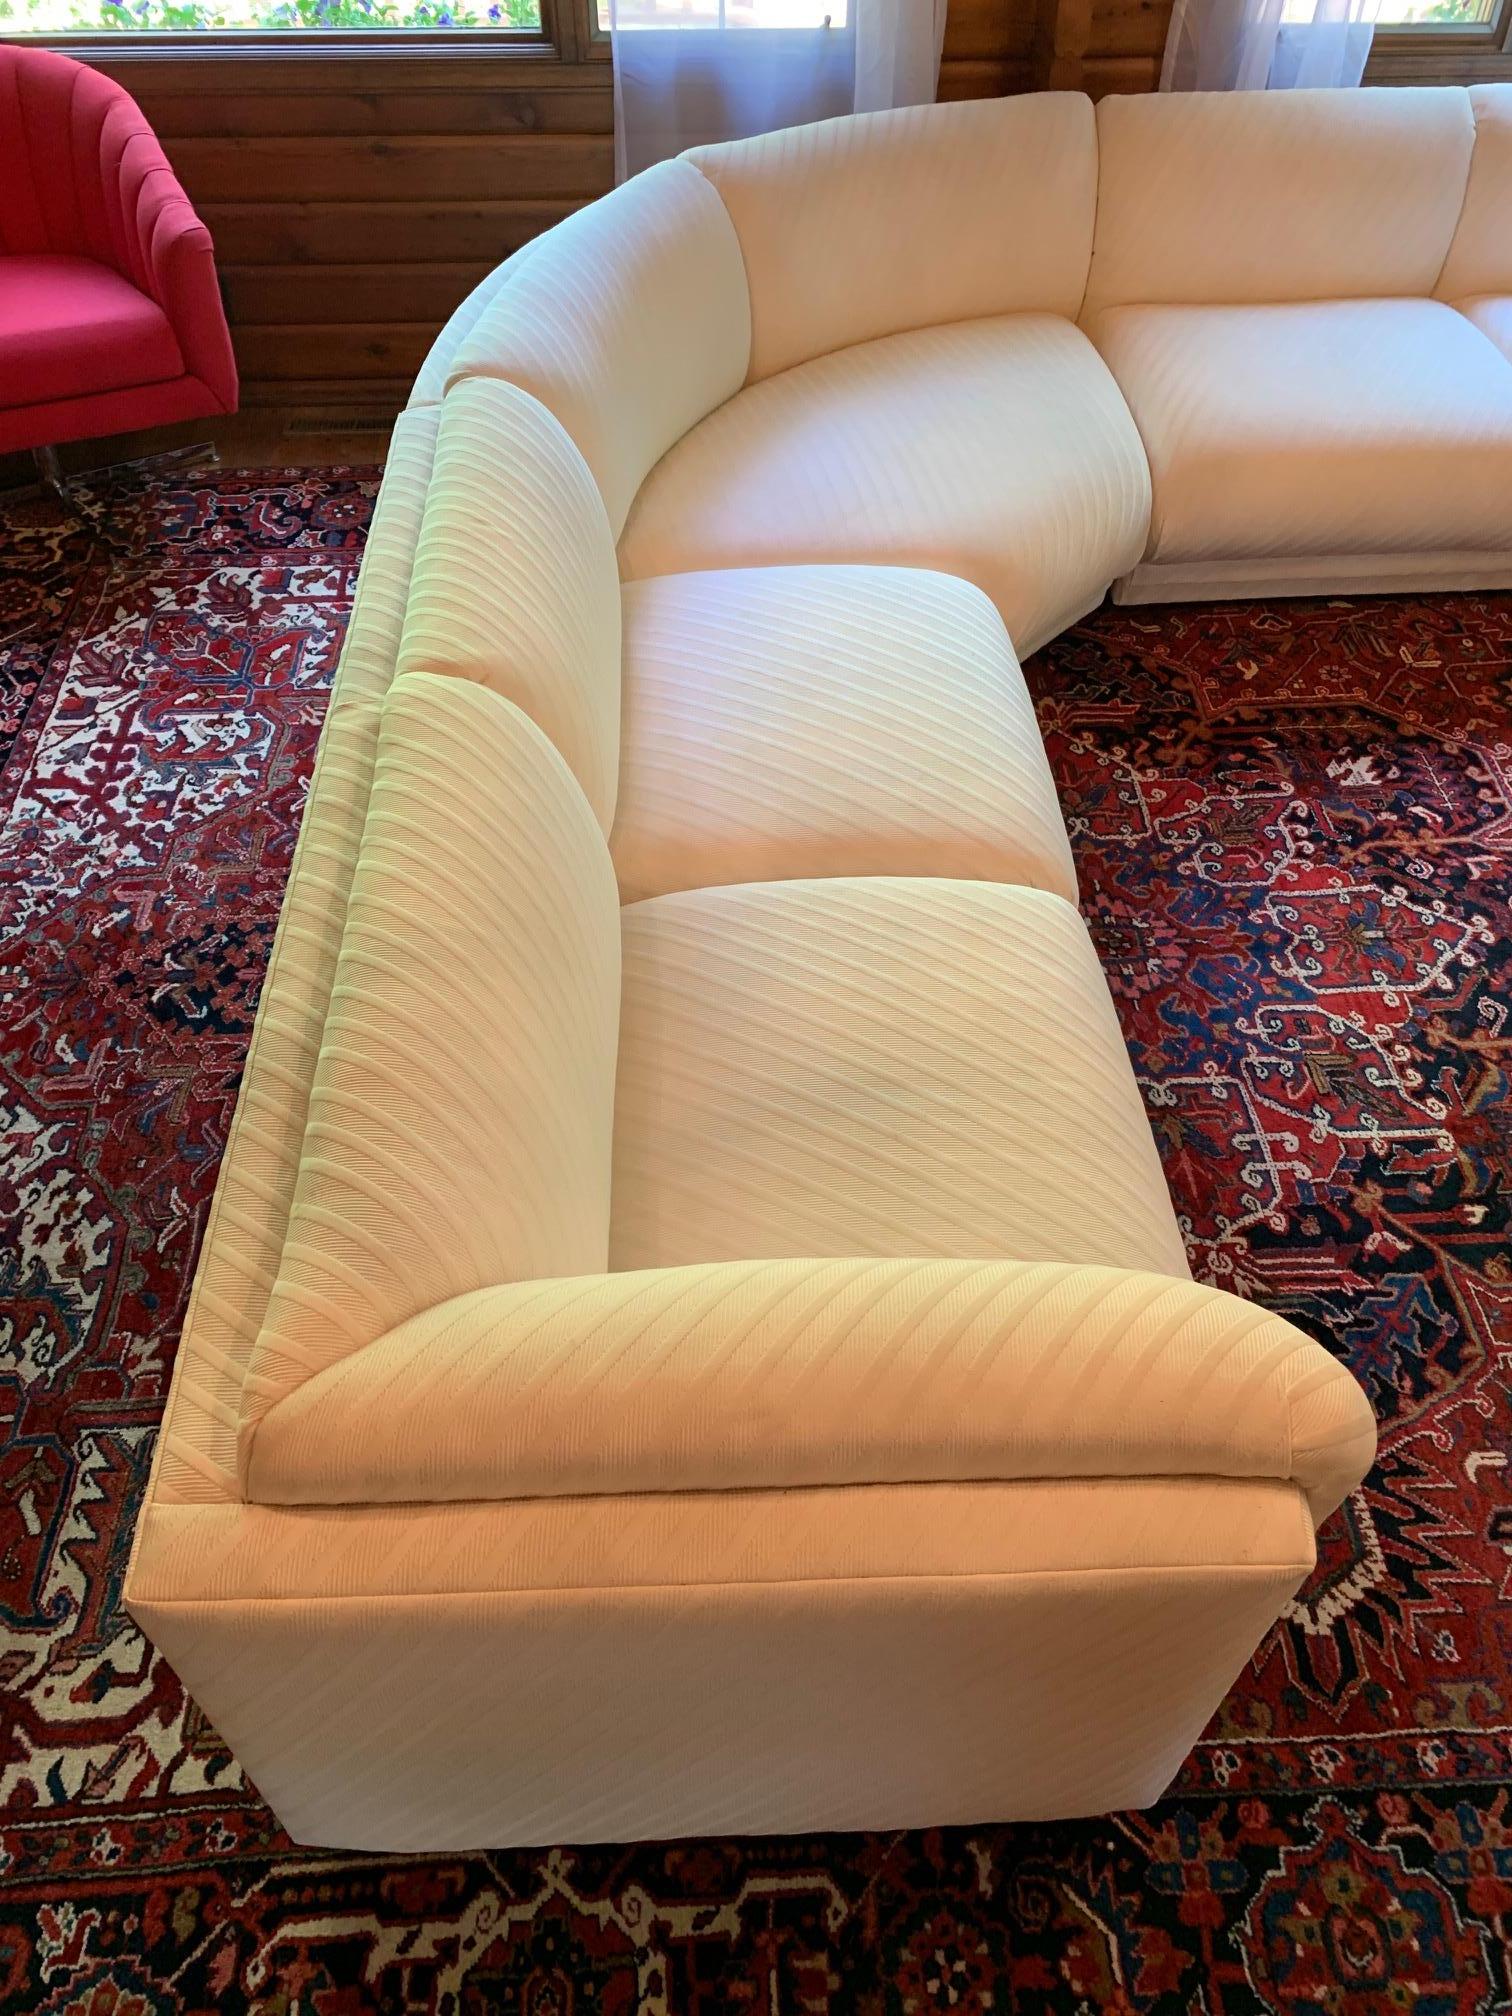 Cotton Vintage Bernhardt 3 pc Sectional Sofa Attributed to Milo Baughman-1989